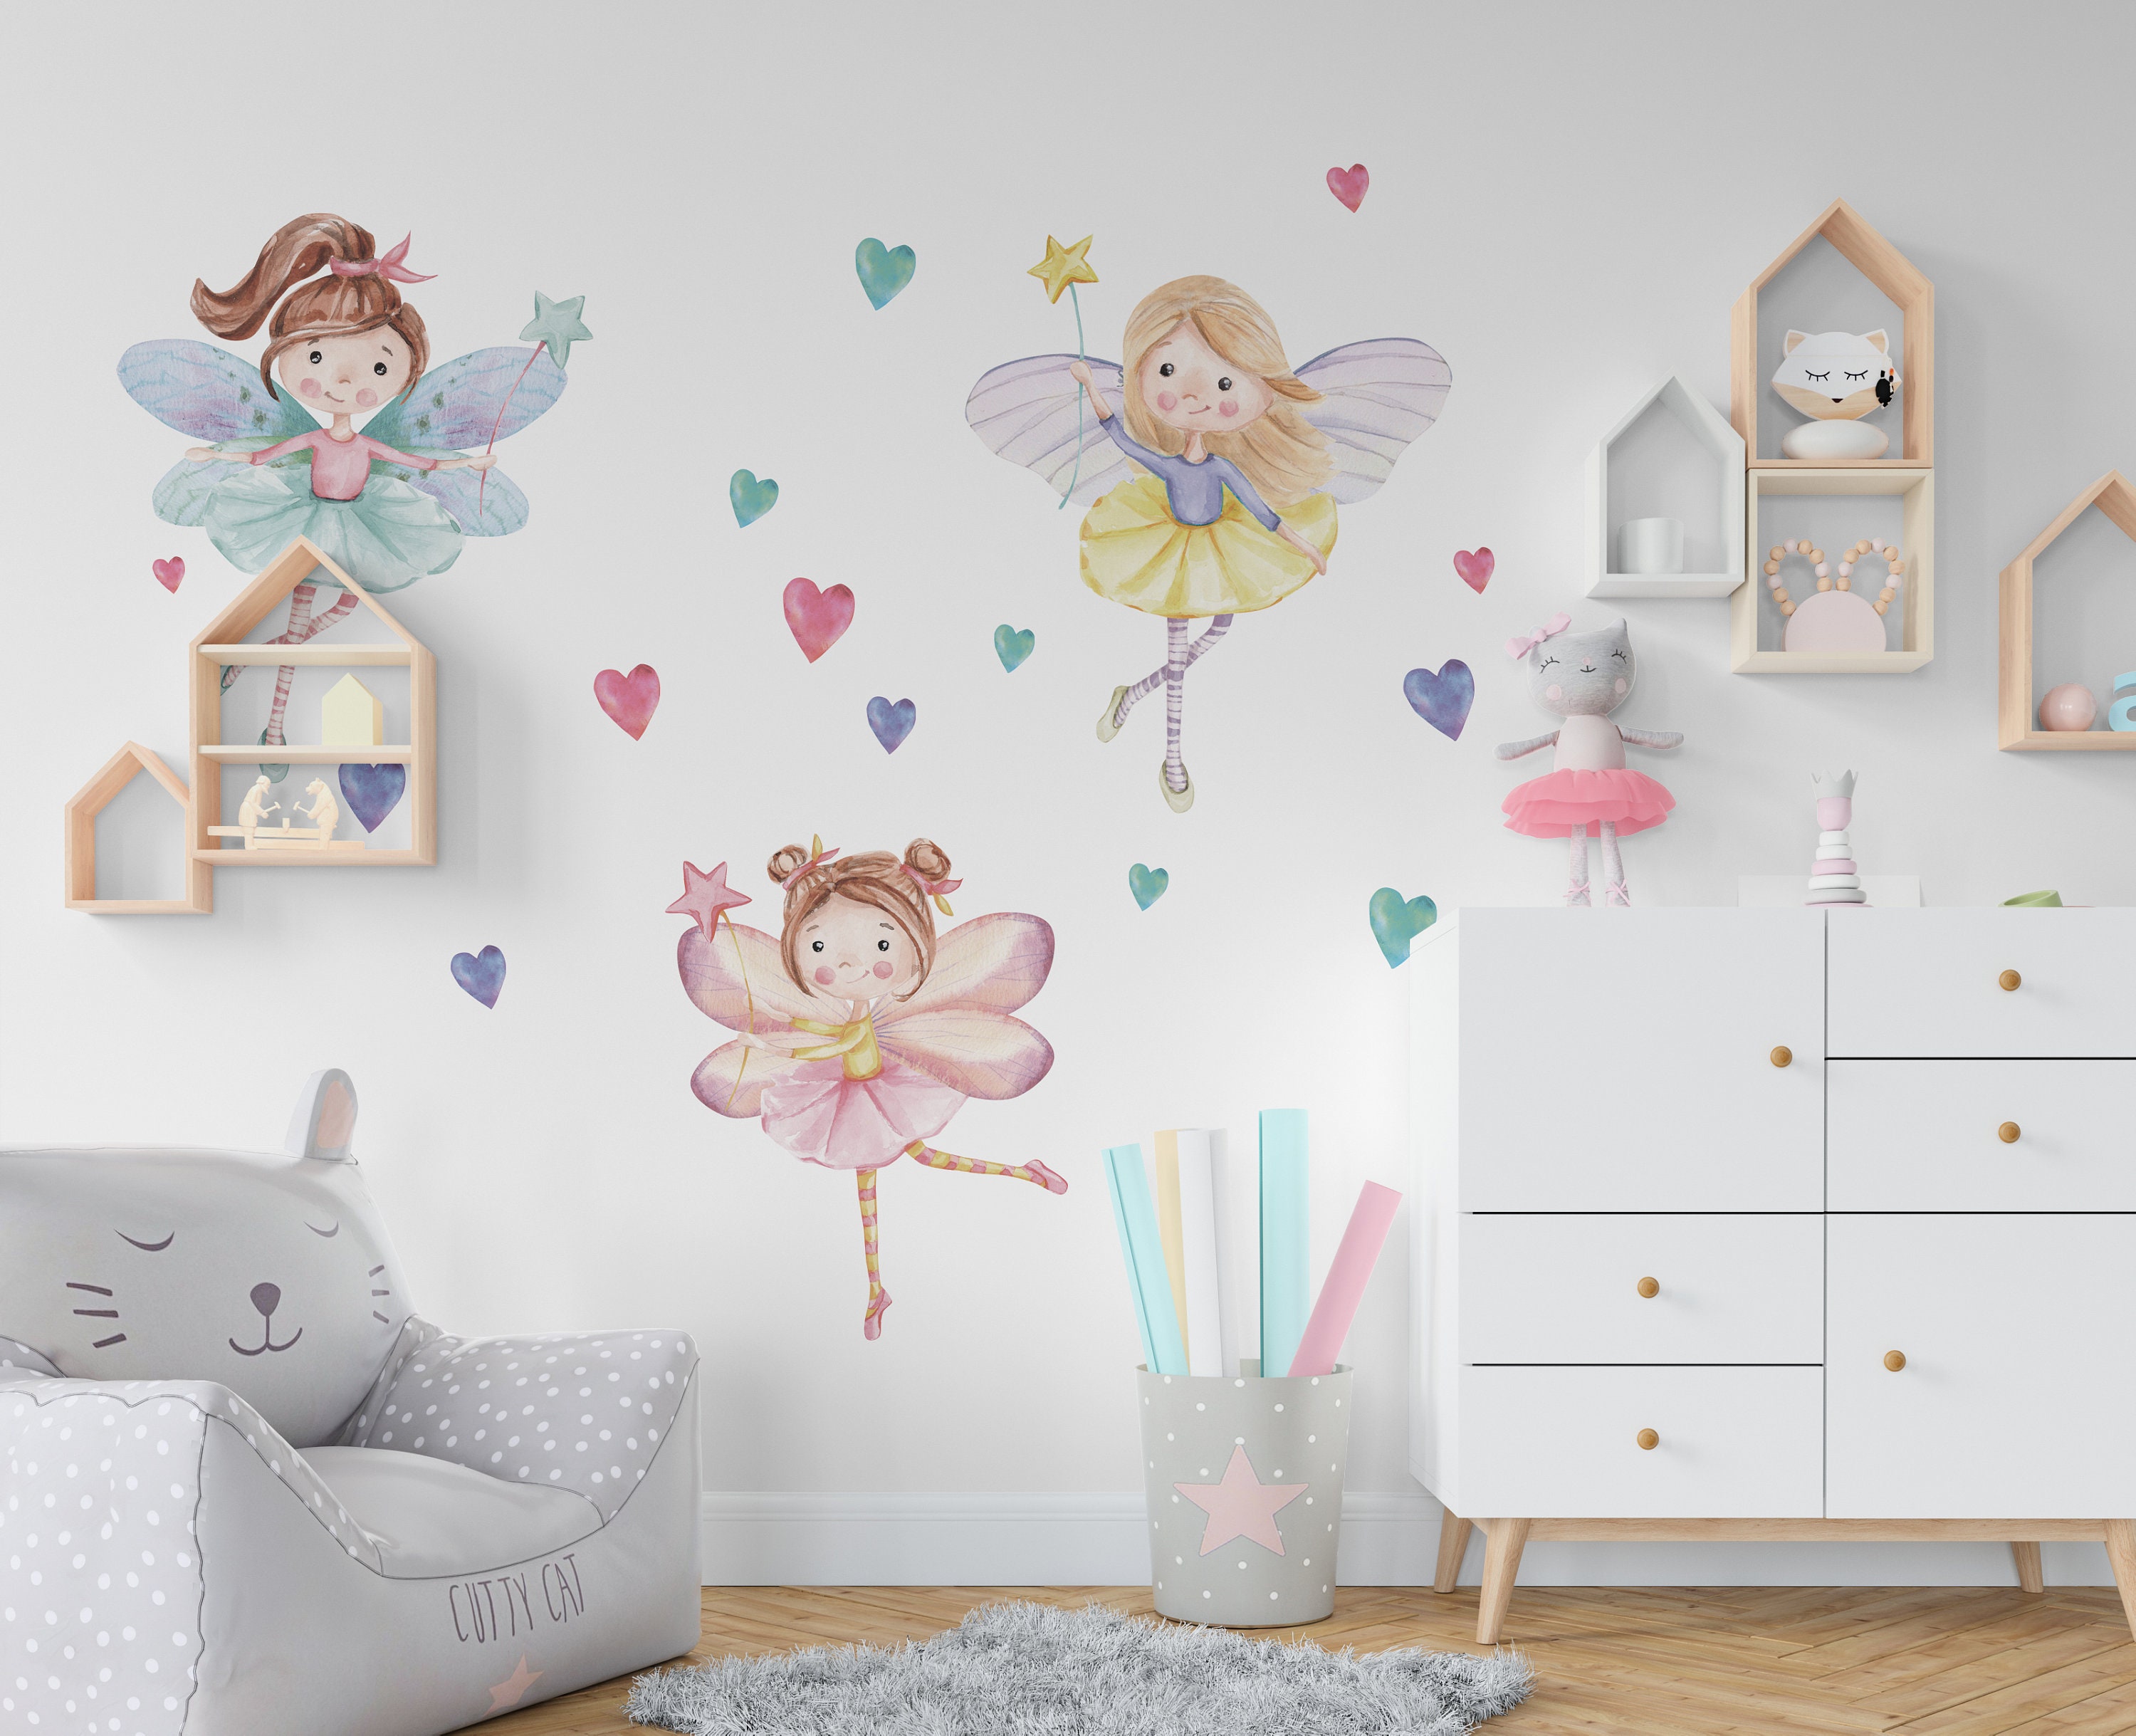 Fairy decor, fairy nursery decor, girls nursery decor, free standing fairy,  girls pink nursery decor, girls bedroom accessories, tutu wings